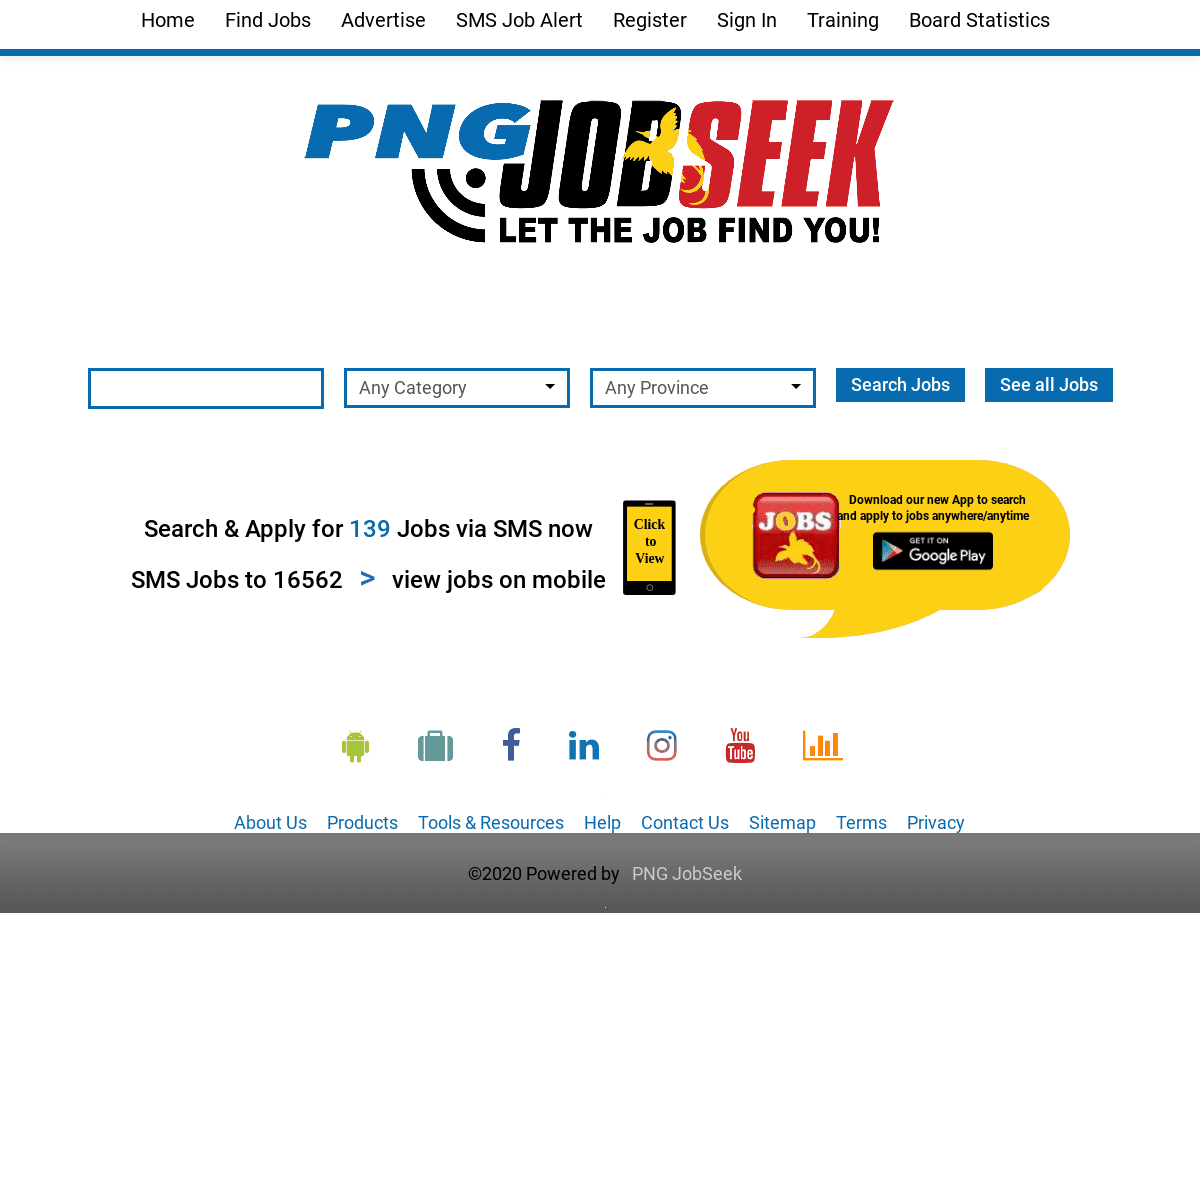 A complete backup of pngjobseek.com